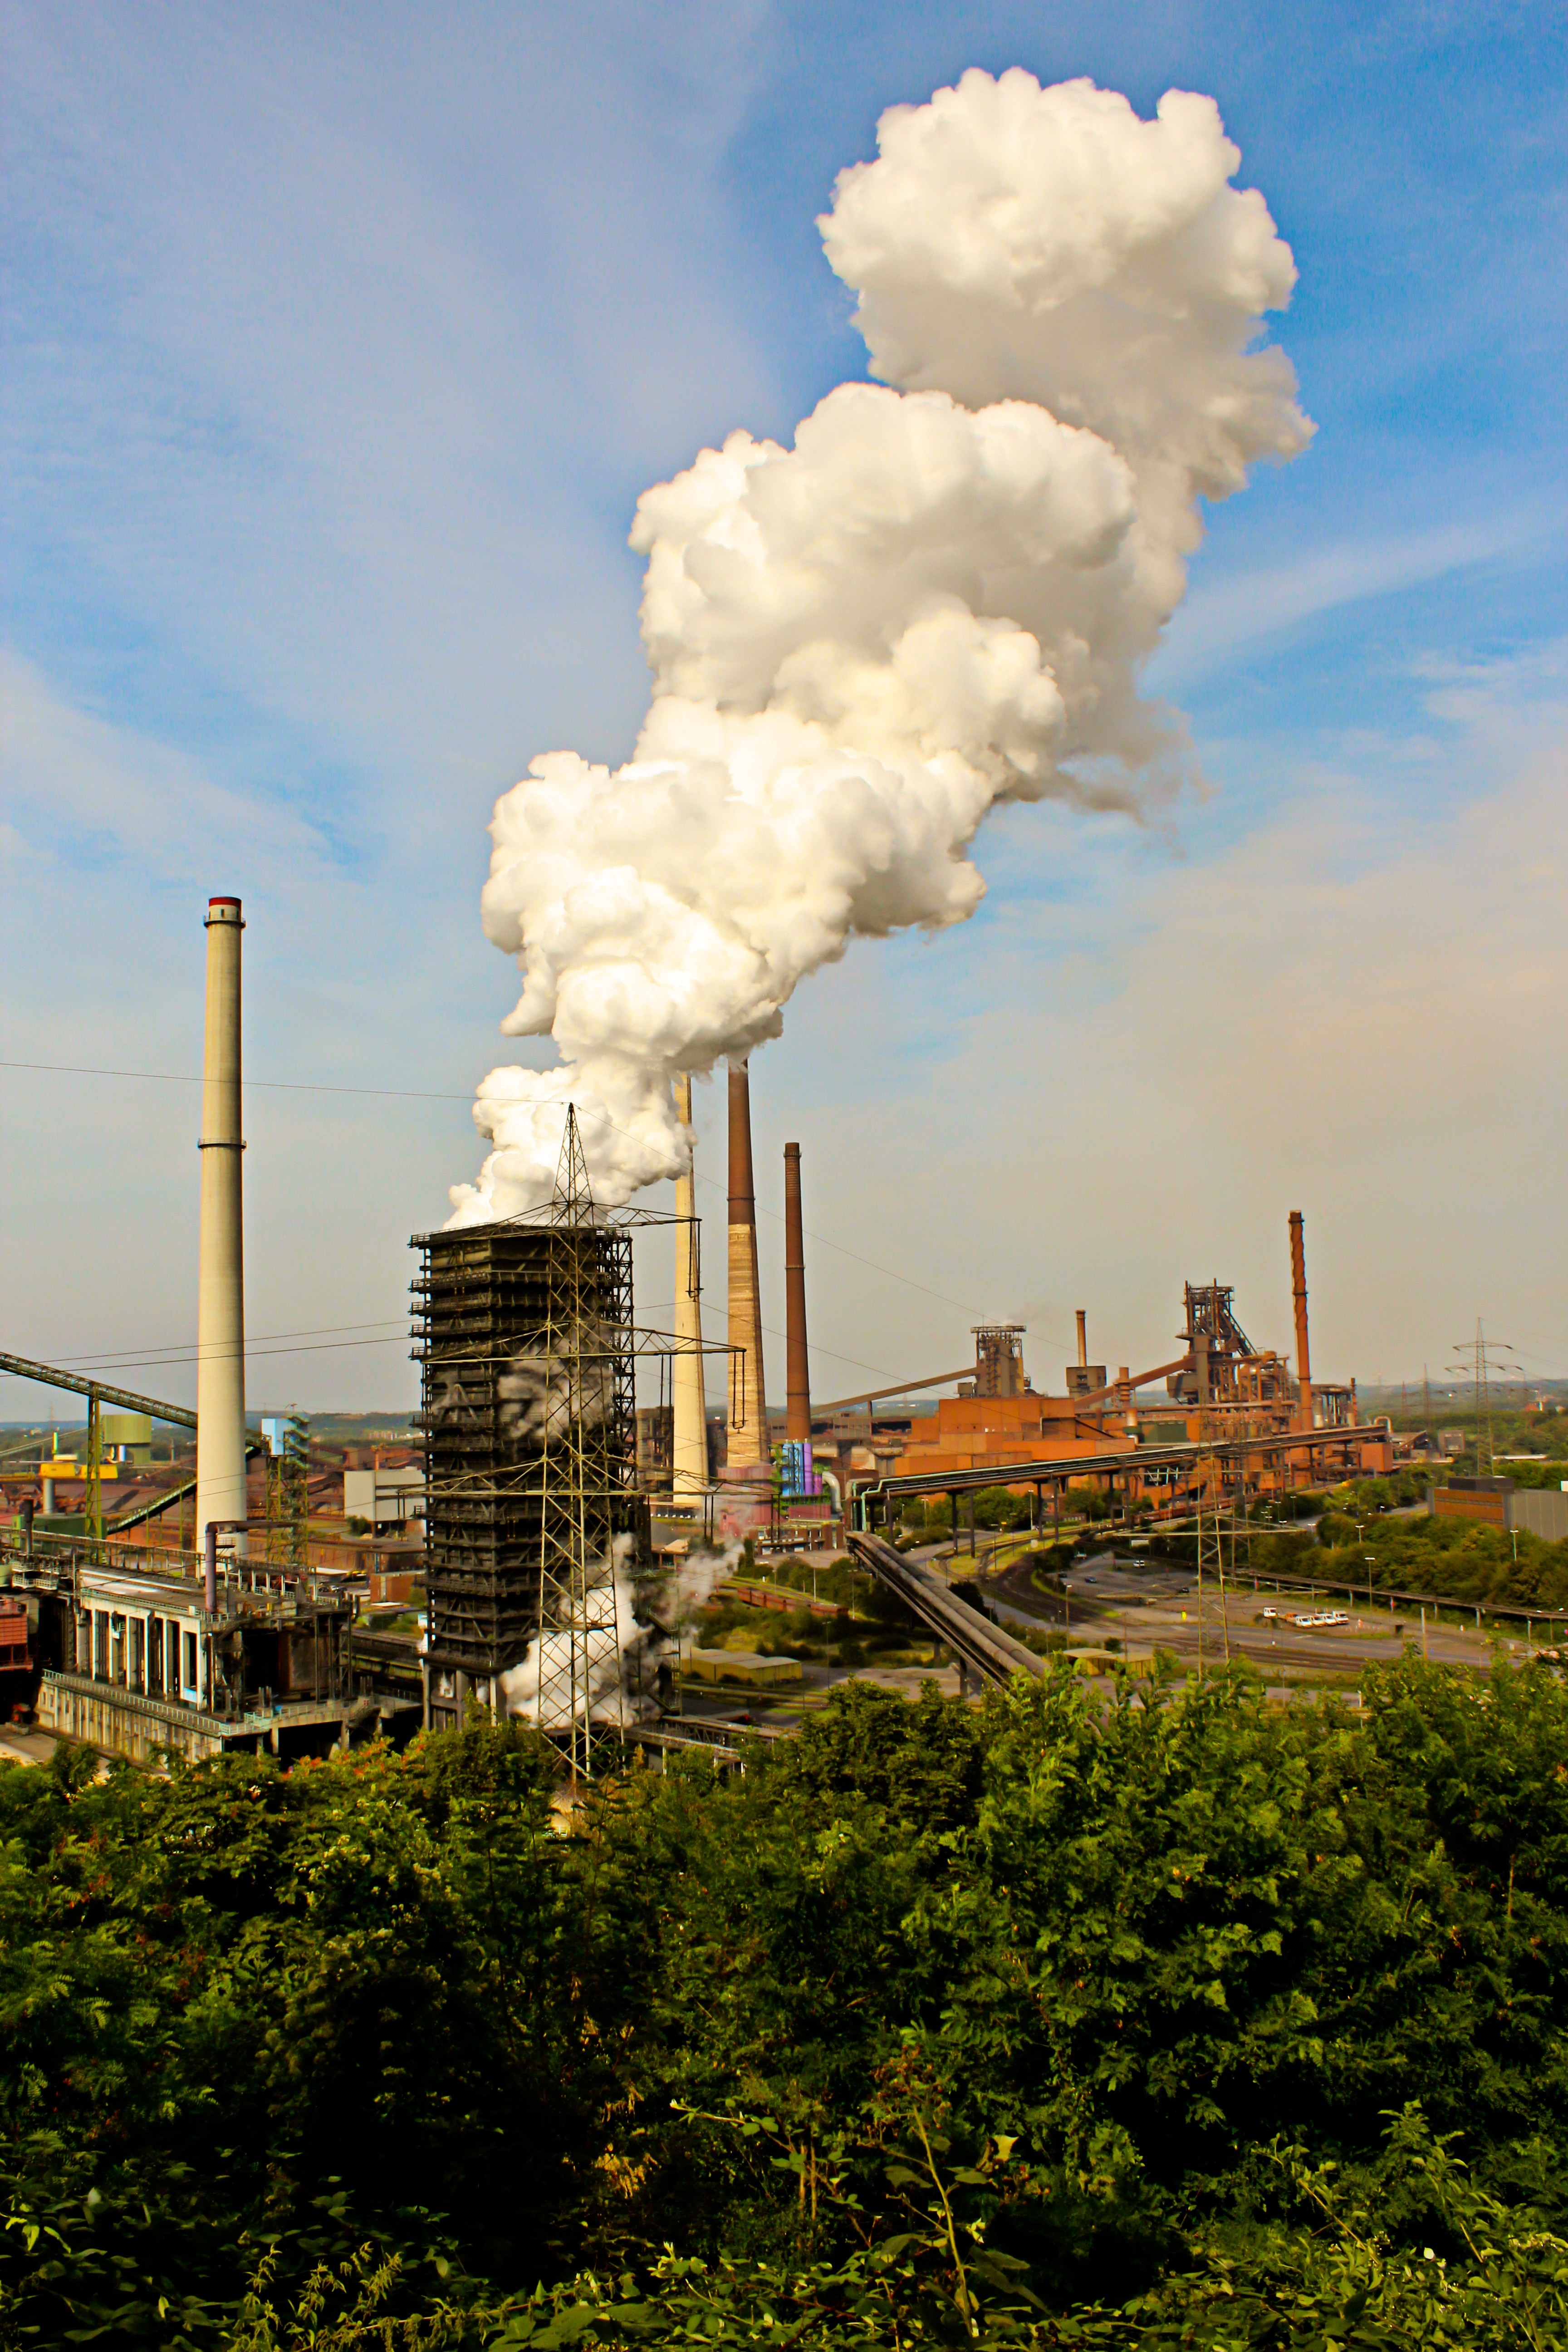 Pollution, Industry, Chimneys, air pollution, industry